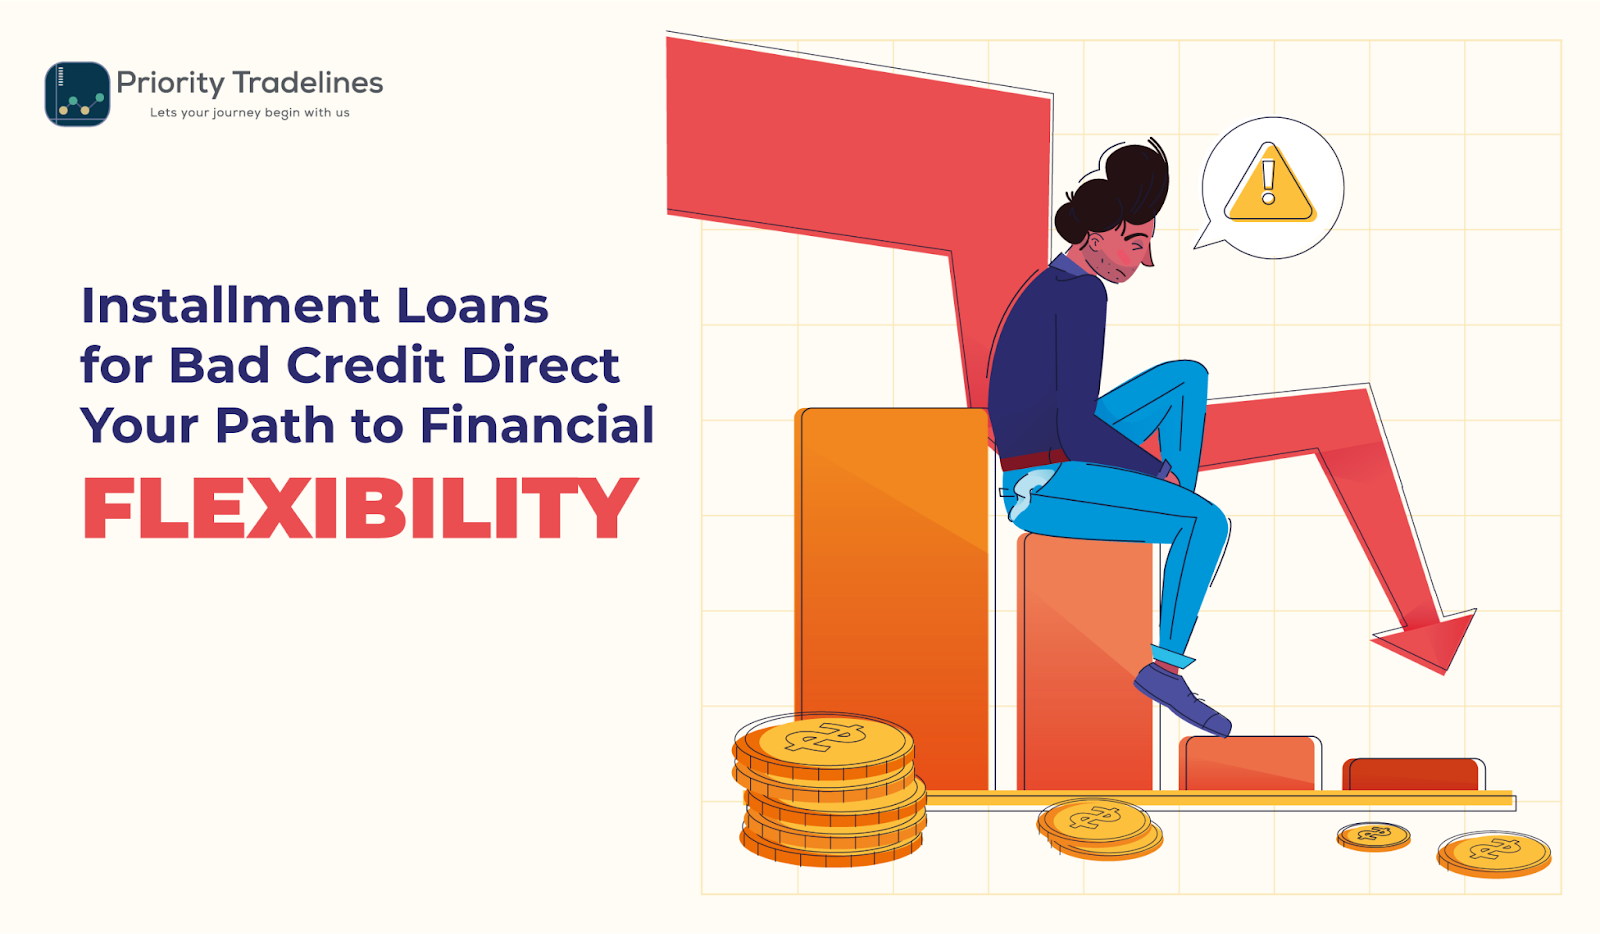 Installment Loans for Bad Credit Direct